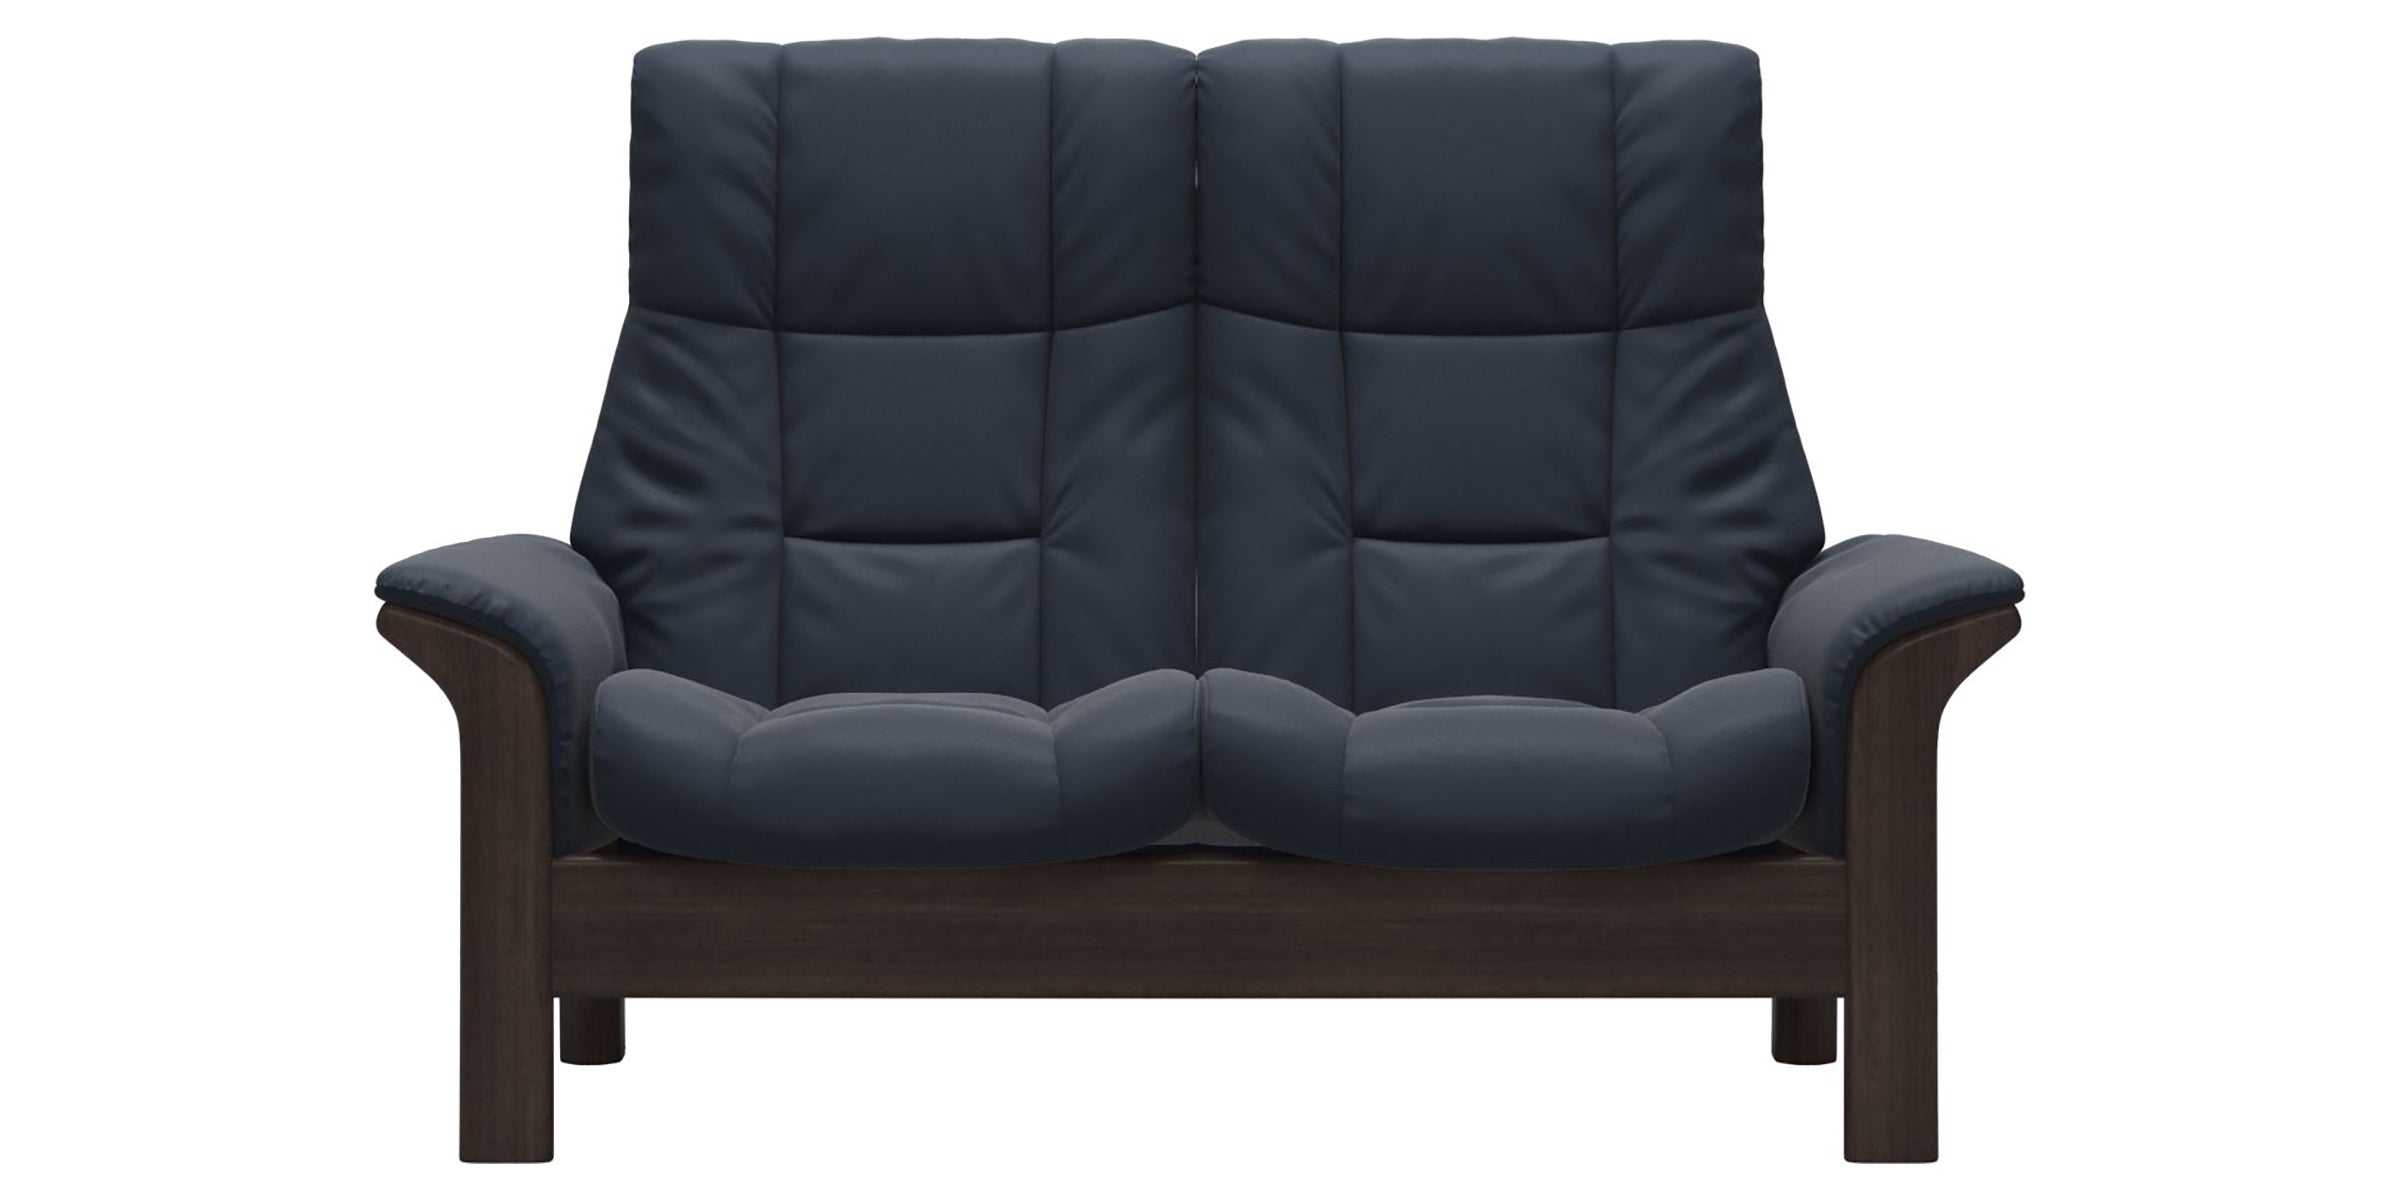 Paloma Leather Oxford Blue and Wenge Base | Stressless Windsor 2-Seater High Back Sofa | Valley Ridge Furniture